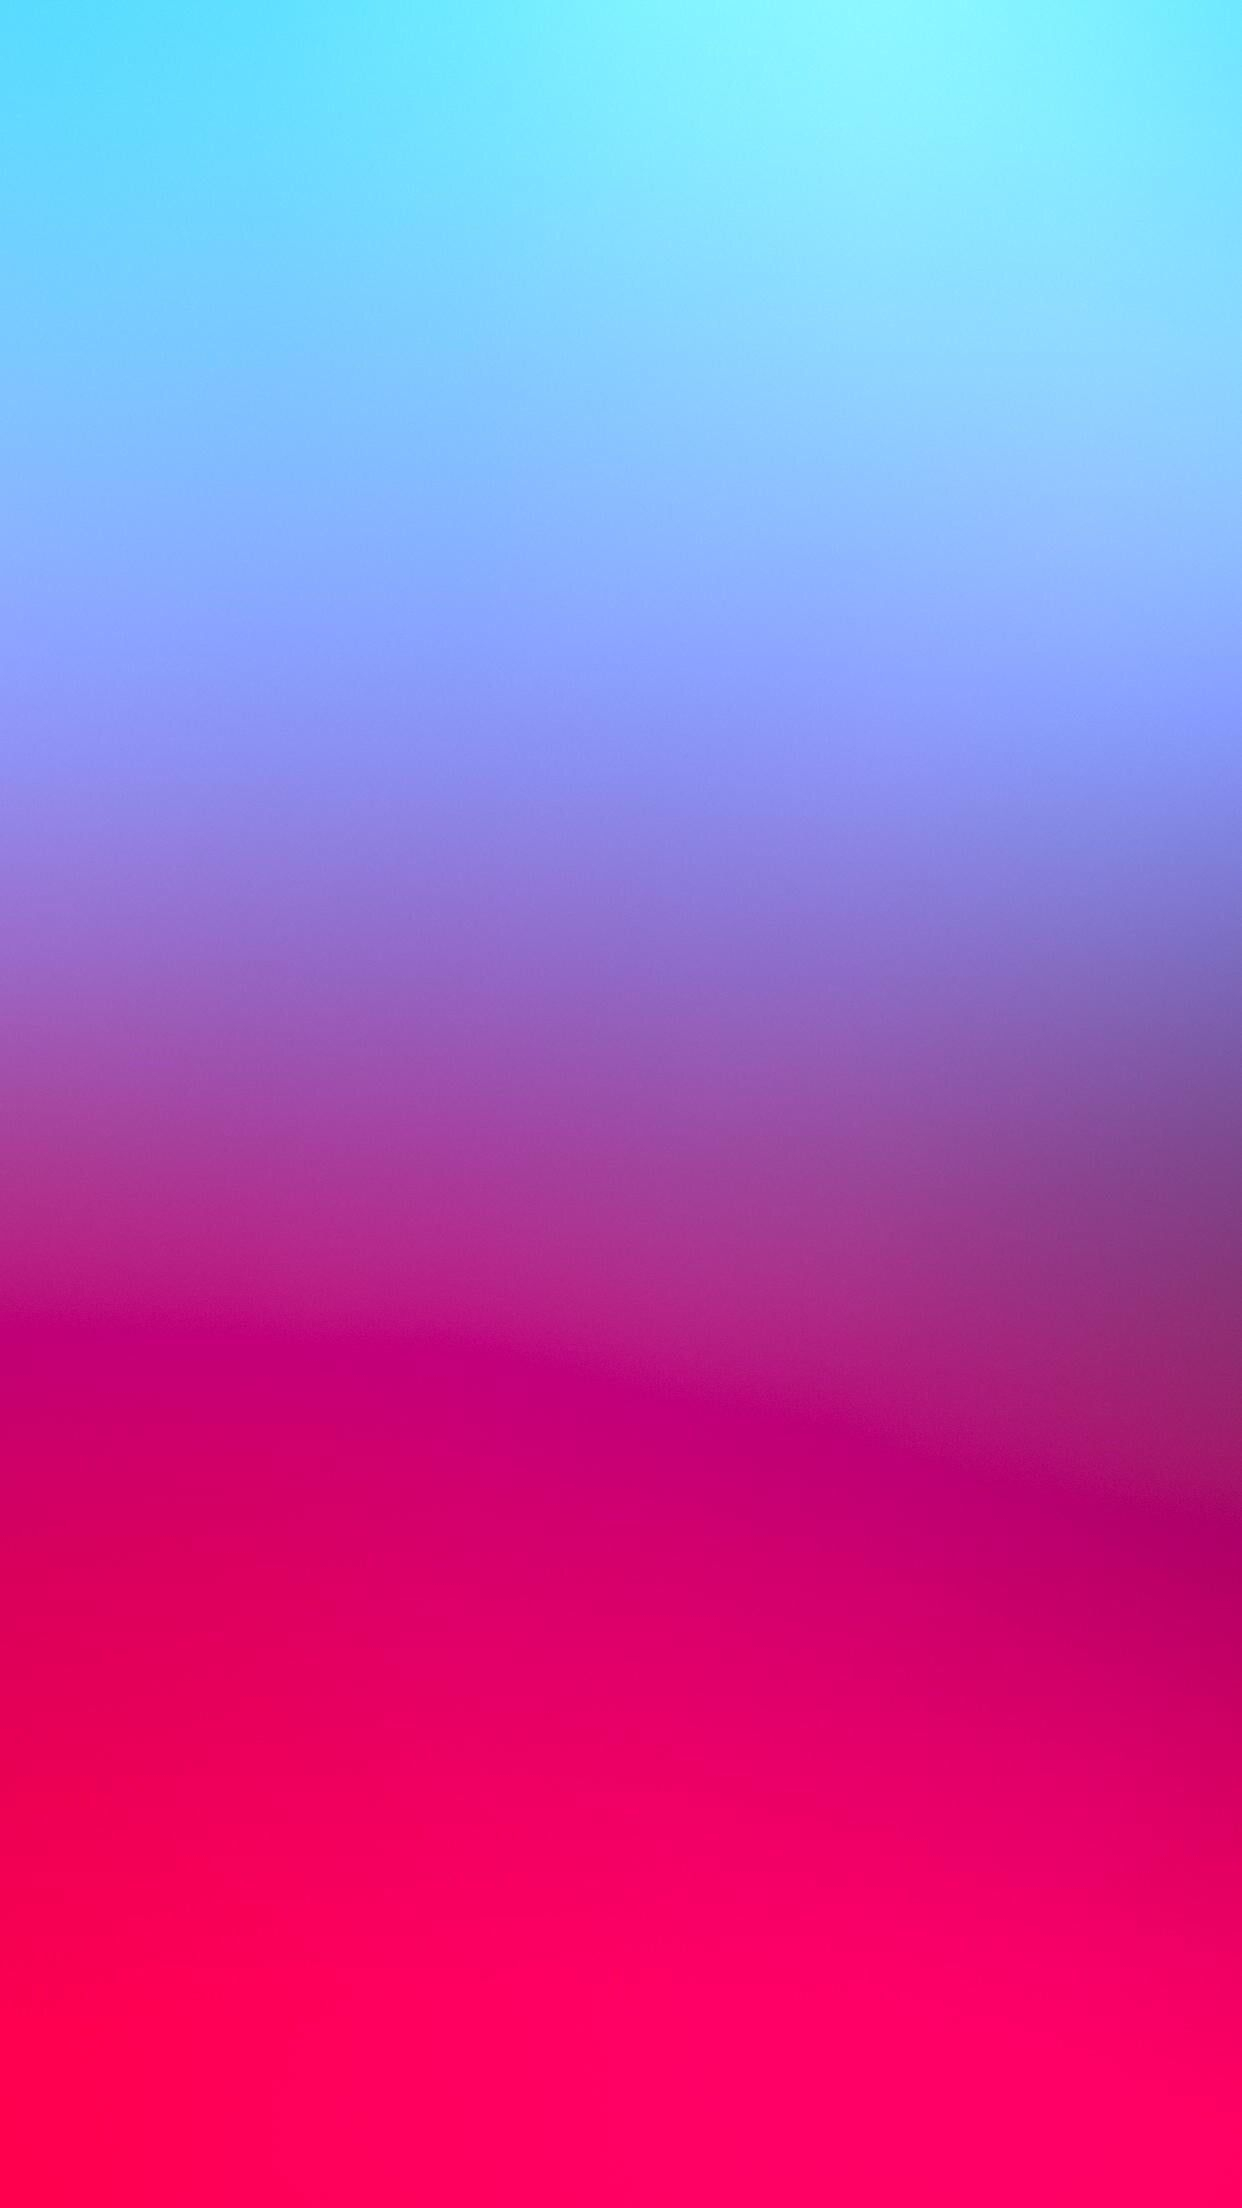 1242x2208 blurred #colorful #vertical portrait display #1080P #wallpaper #hdwallpaper #desktop | Red gradient background, Pastel gradient, Abstract